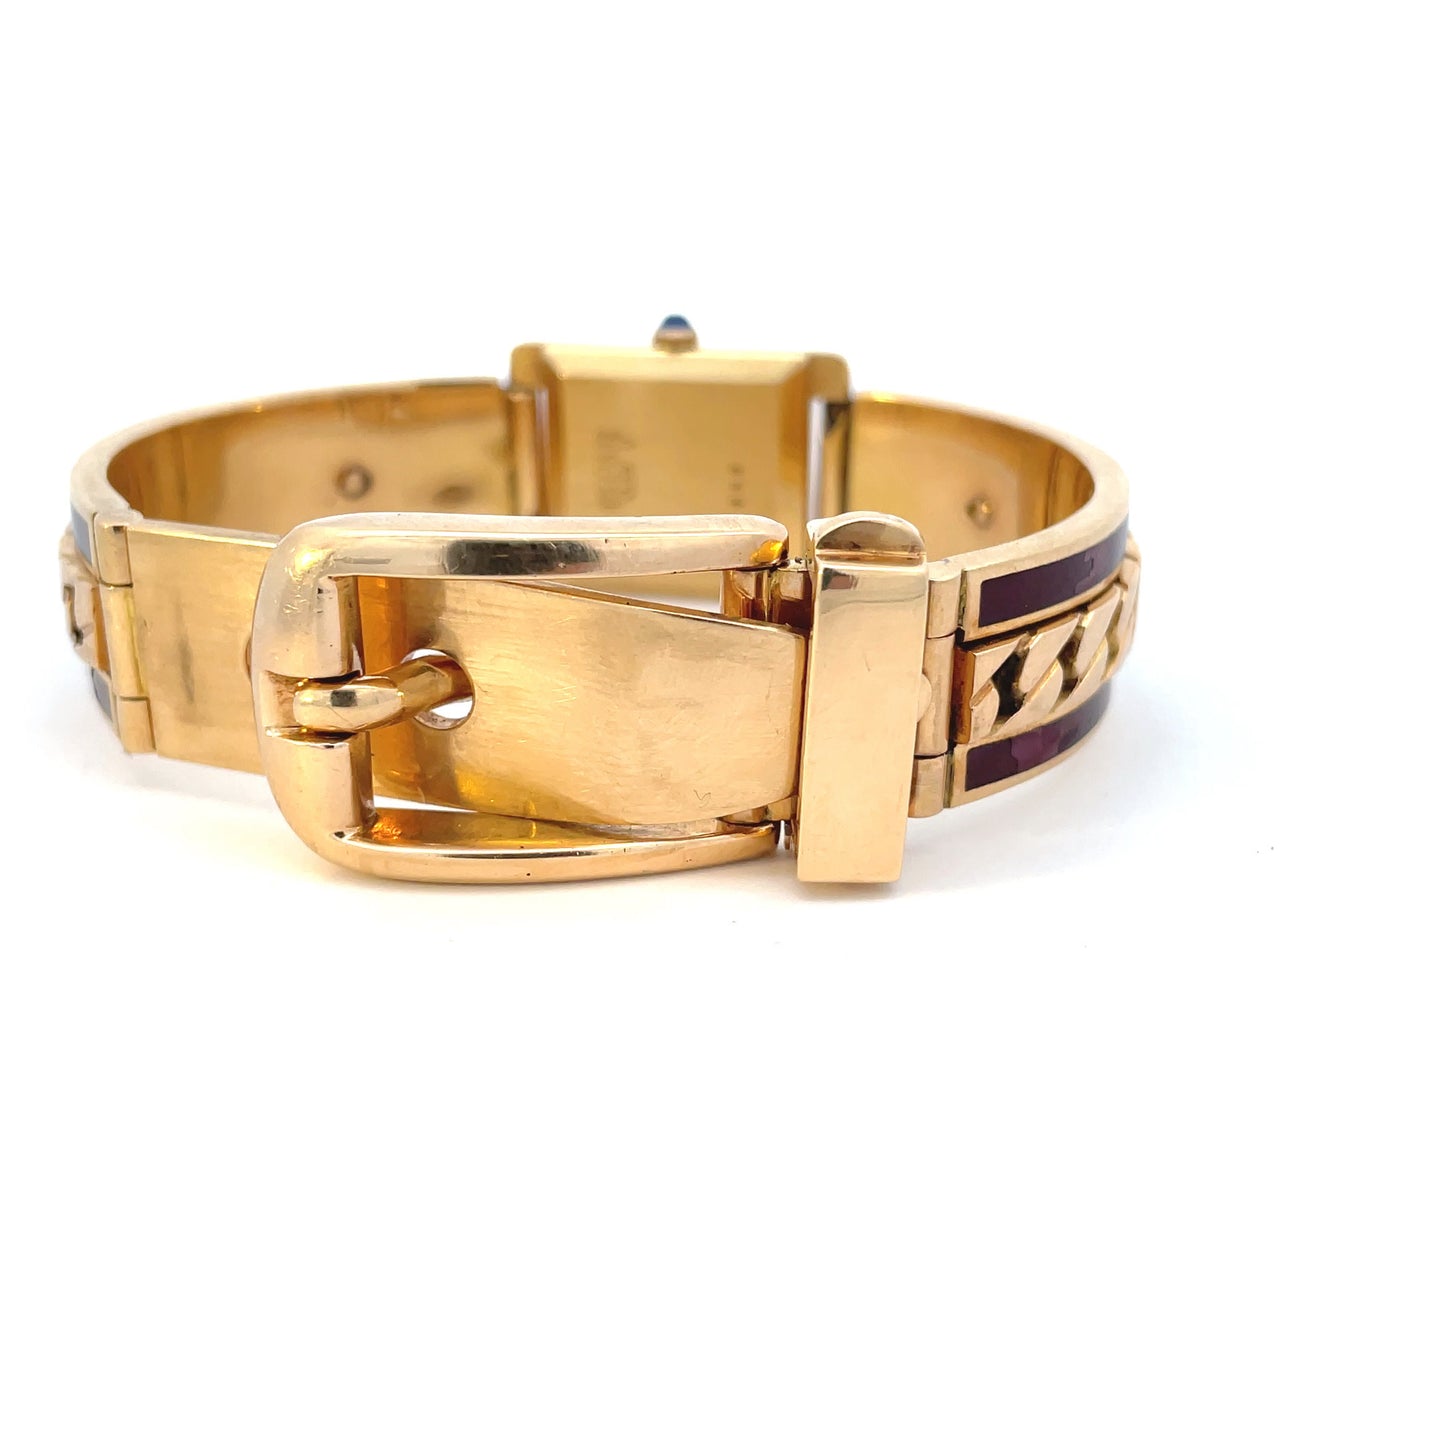 Gucci 1970s 18KT Yellow Gold & Enamel Bracelet Watch back buckle view